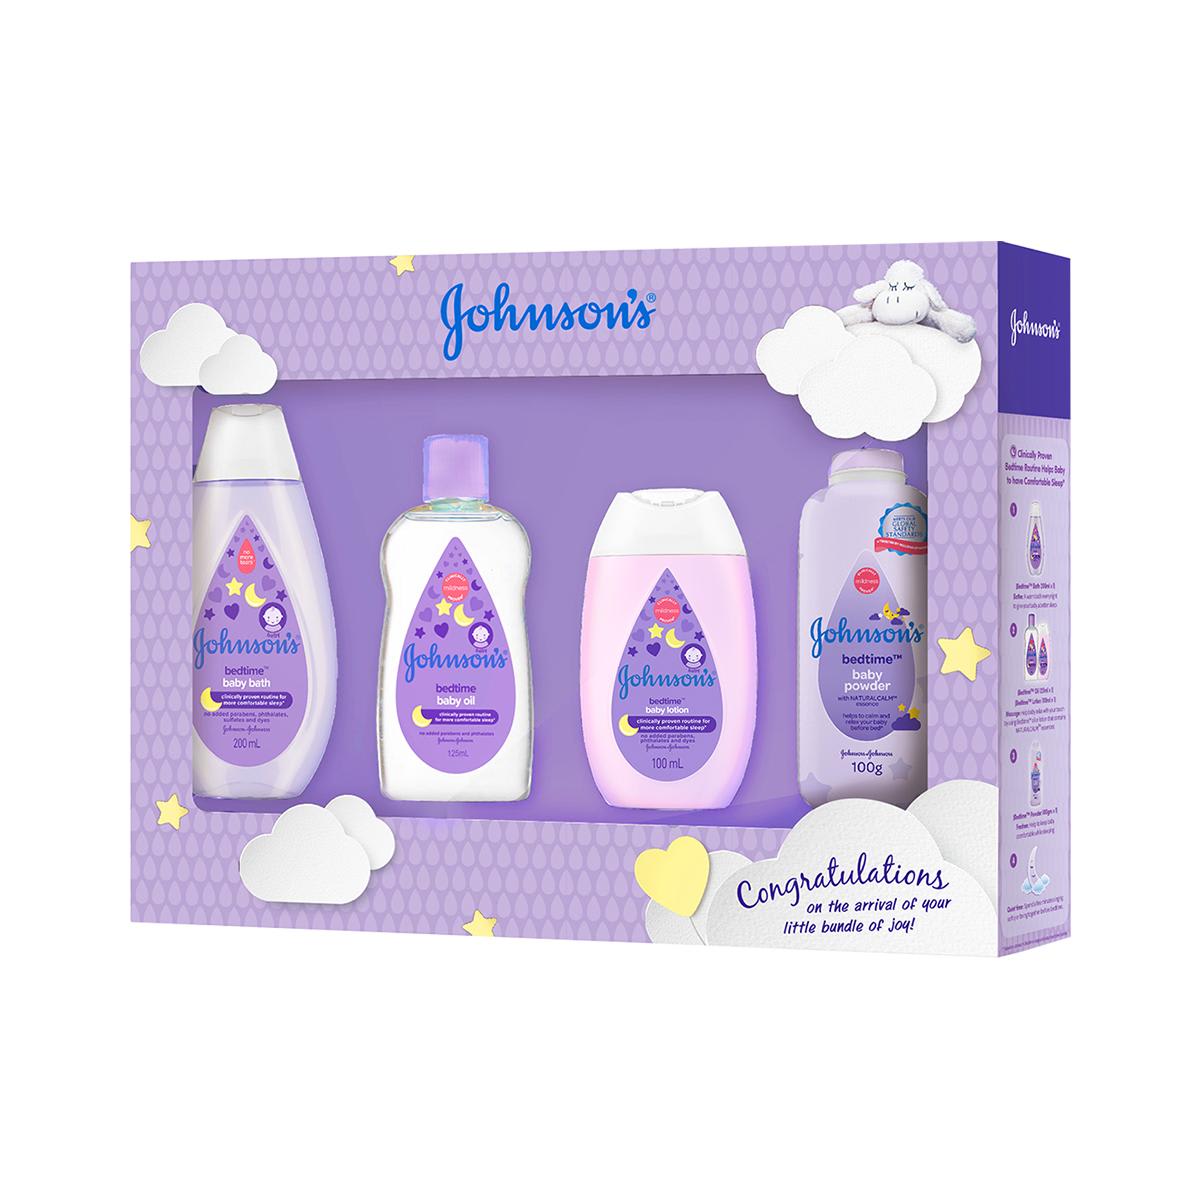 Johnson's Baby Gifting Bedtime Gift Set